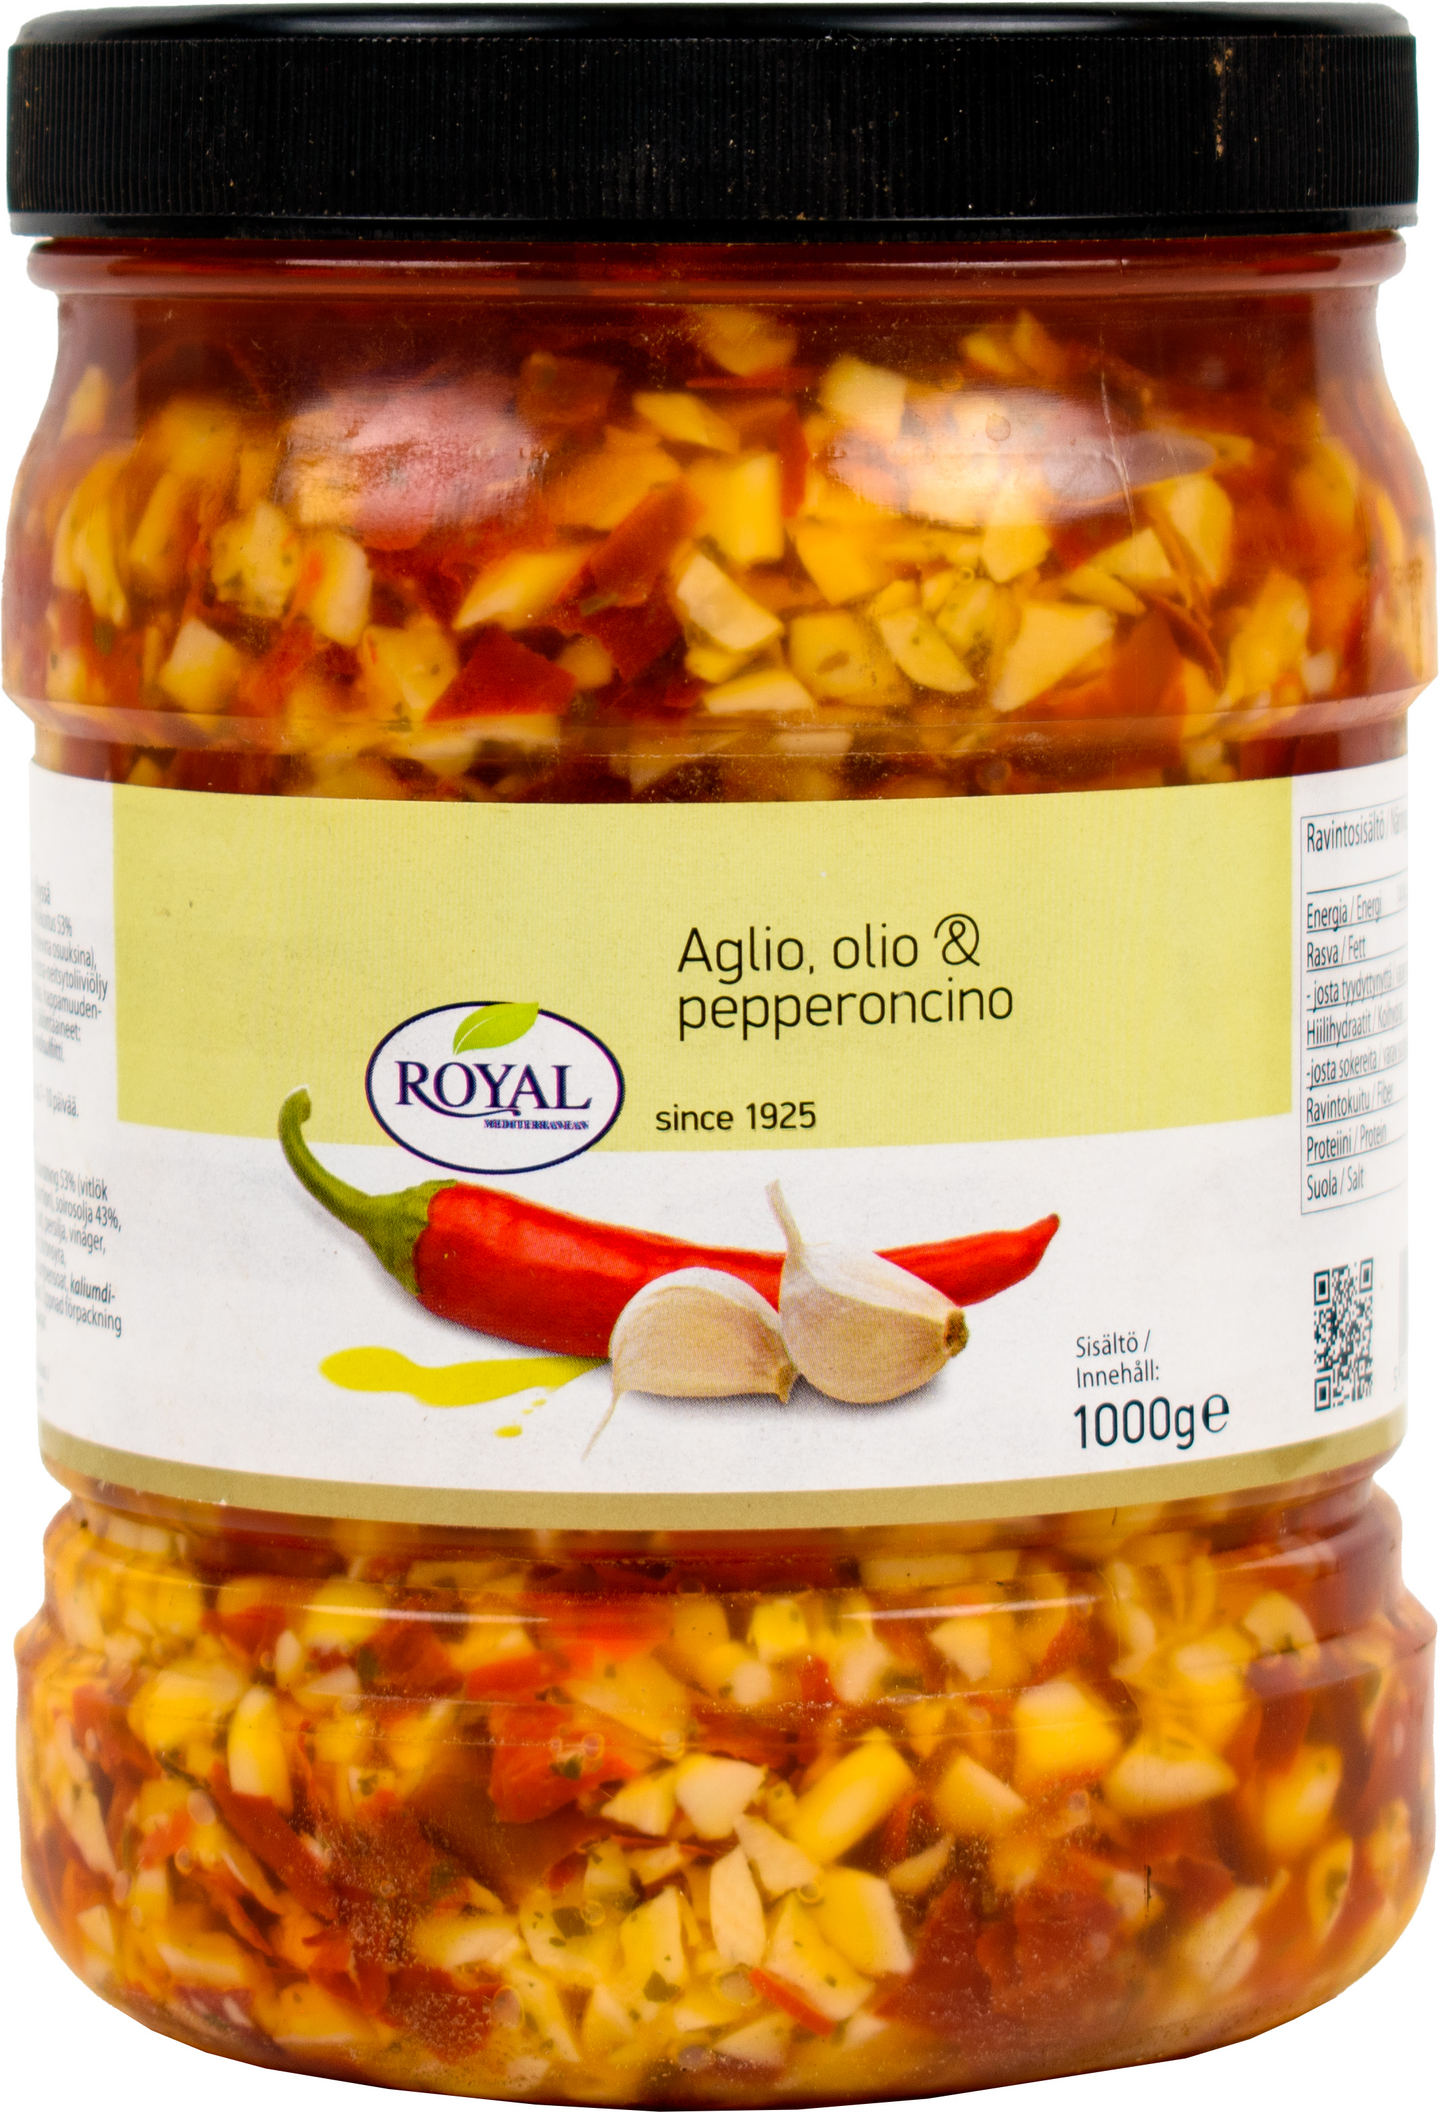 Royal aglio, olio&pepperoncino 1kg